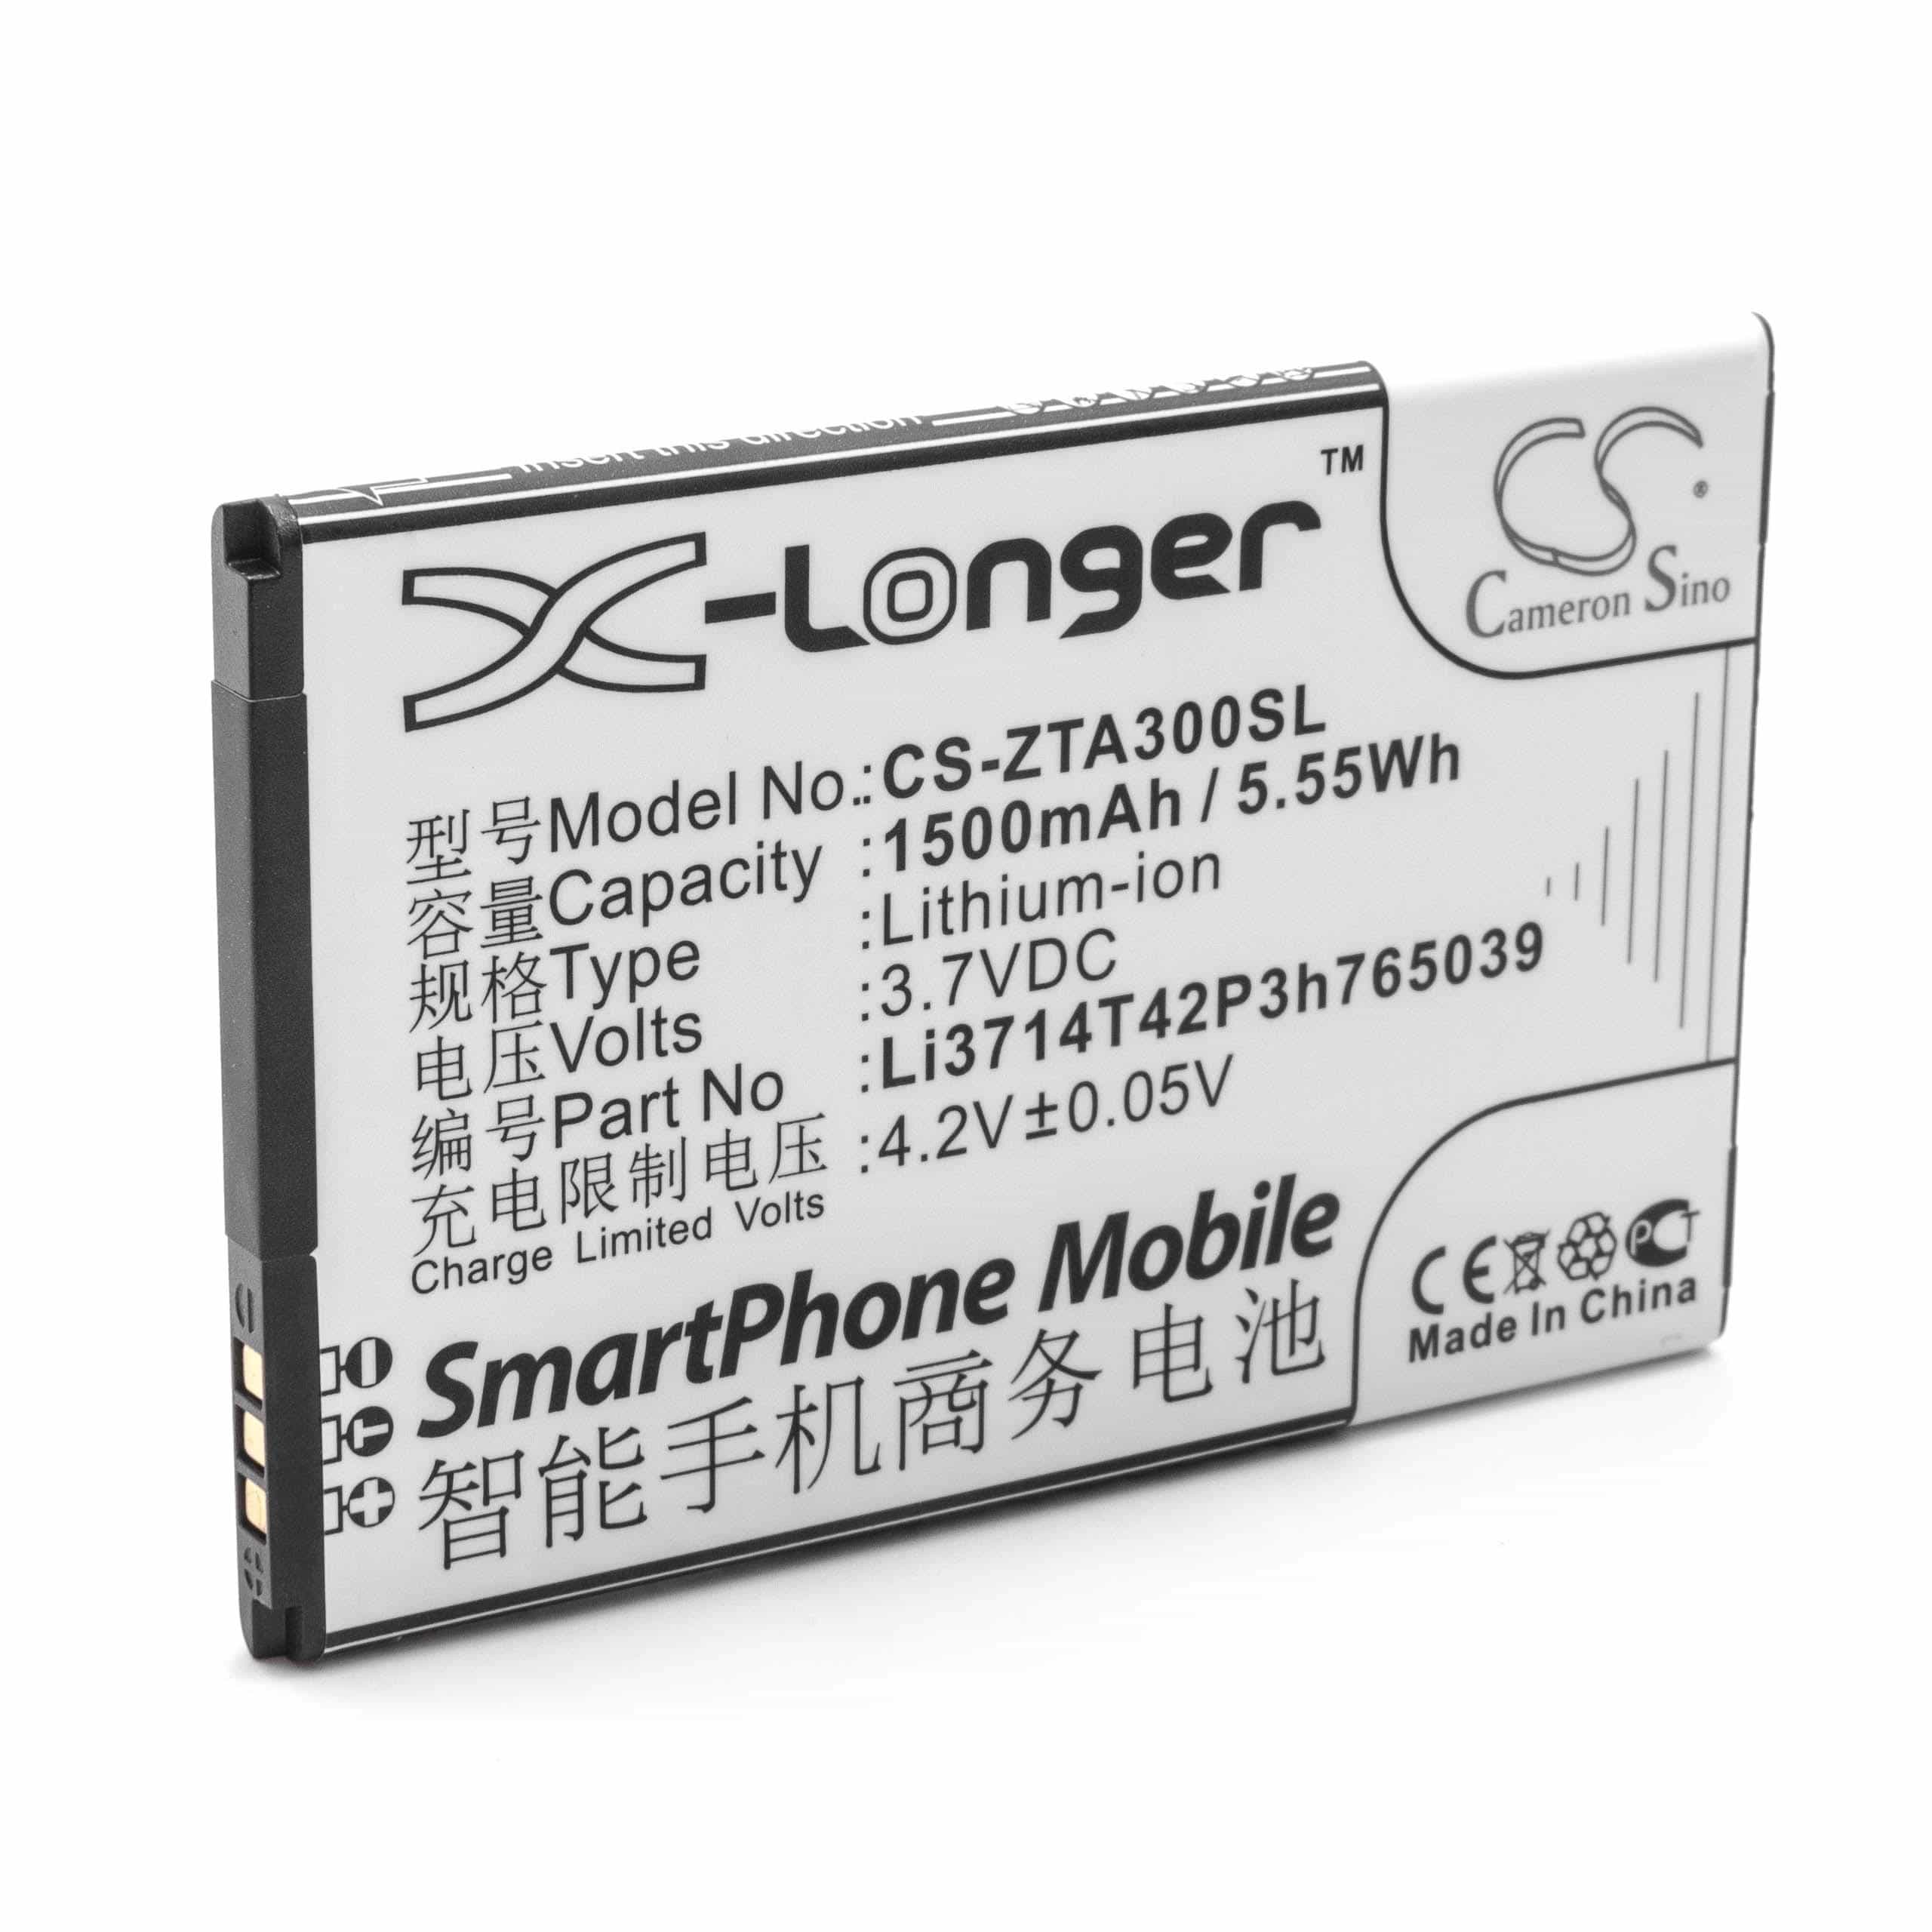 Mobile Phone Battery Replacement for ZTE Li3714T42P3h765039 - 1500mAh 3.7V Li-Ion